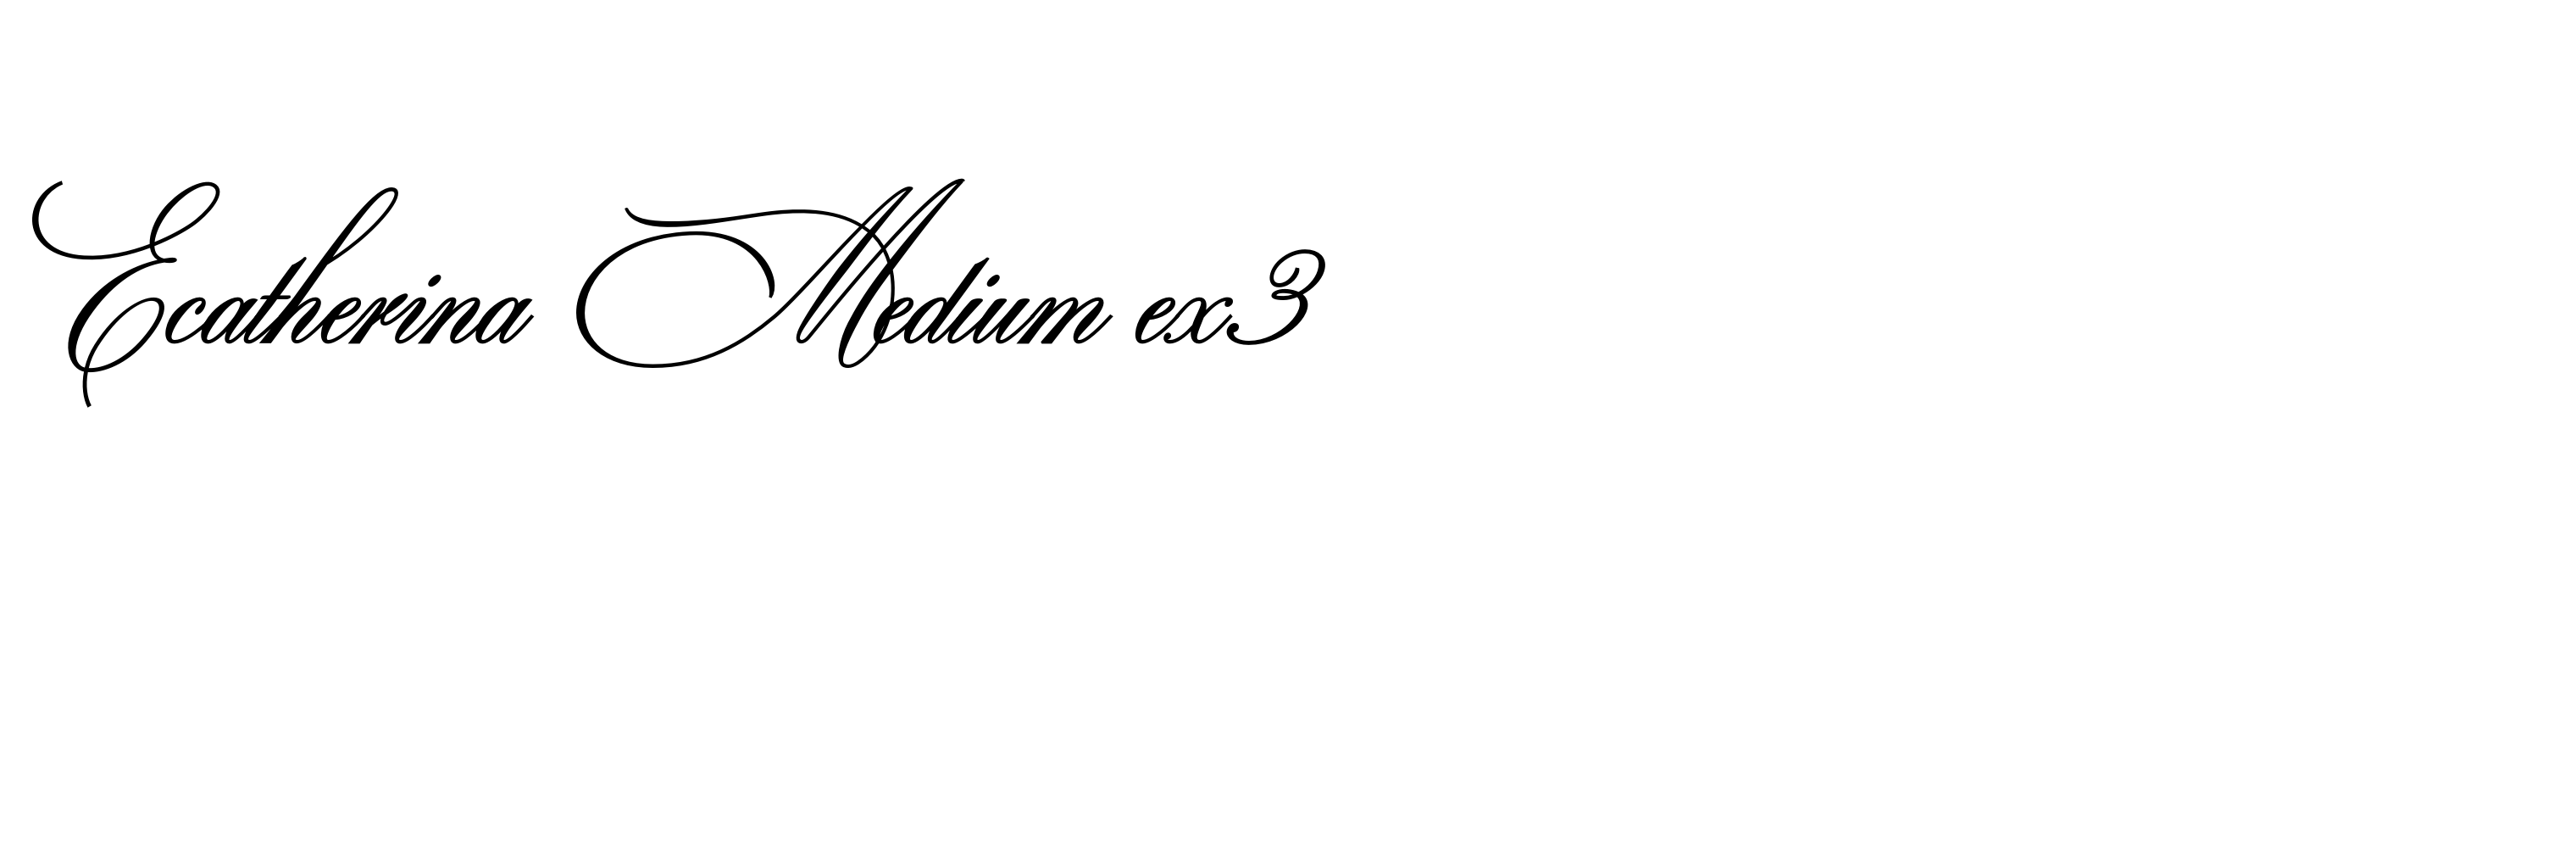 Ecatherina Medium ex3